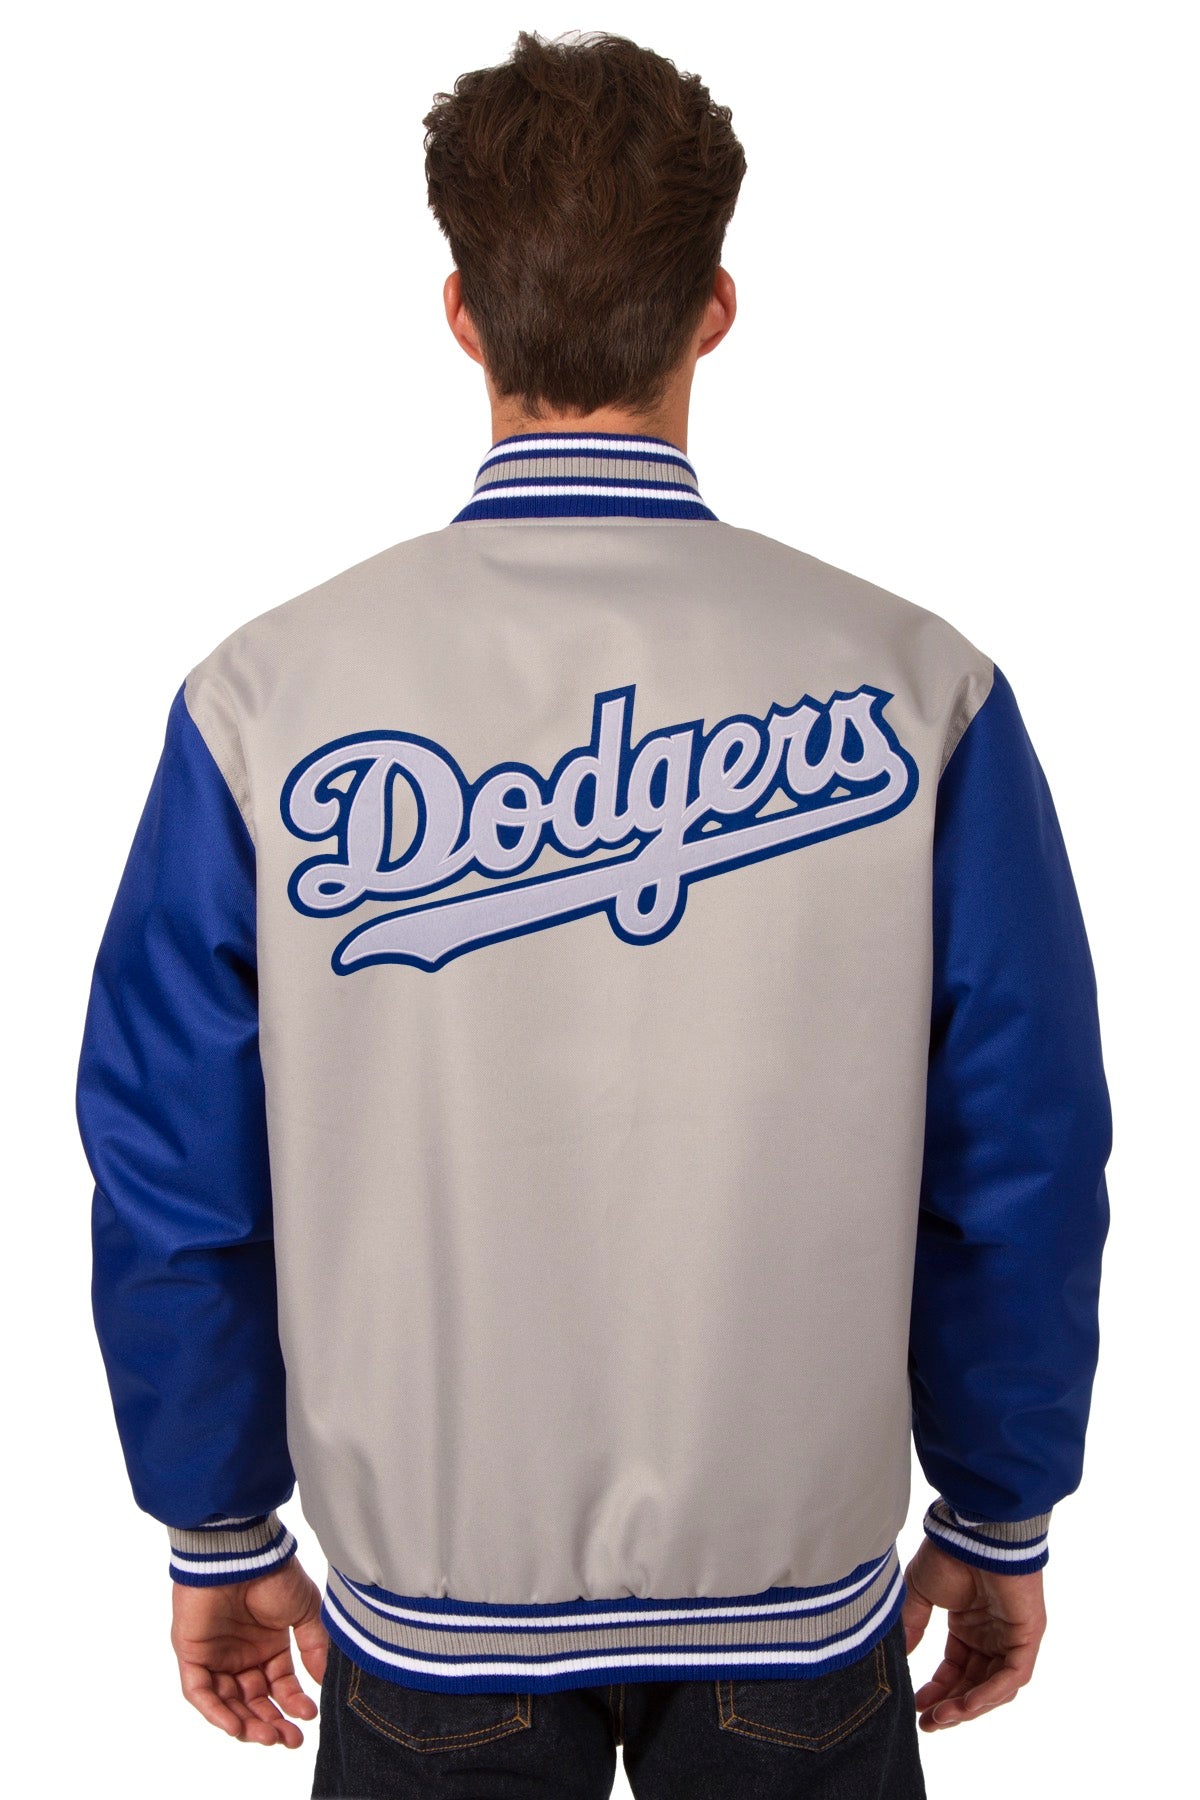 Blue White MLB Los Angeles Dodgers Varsity Jacket - Maker of Jacket